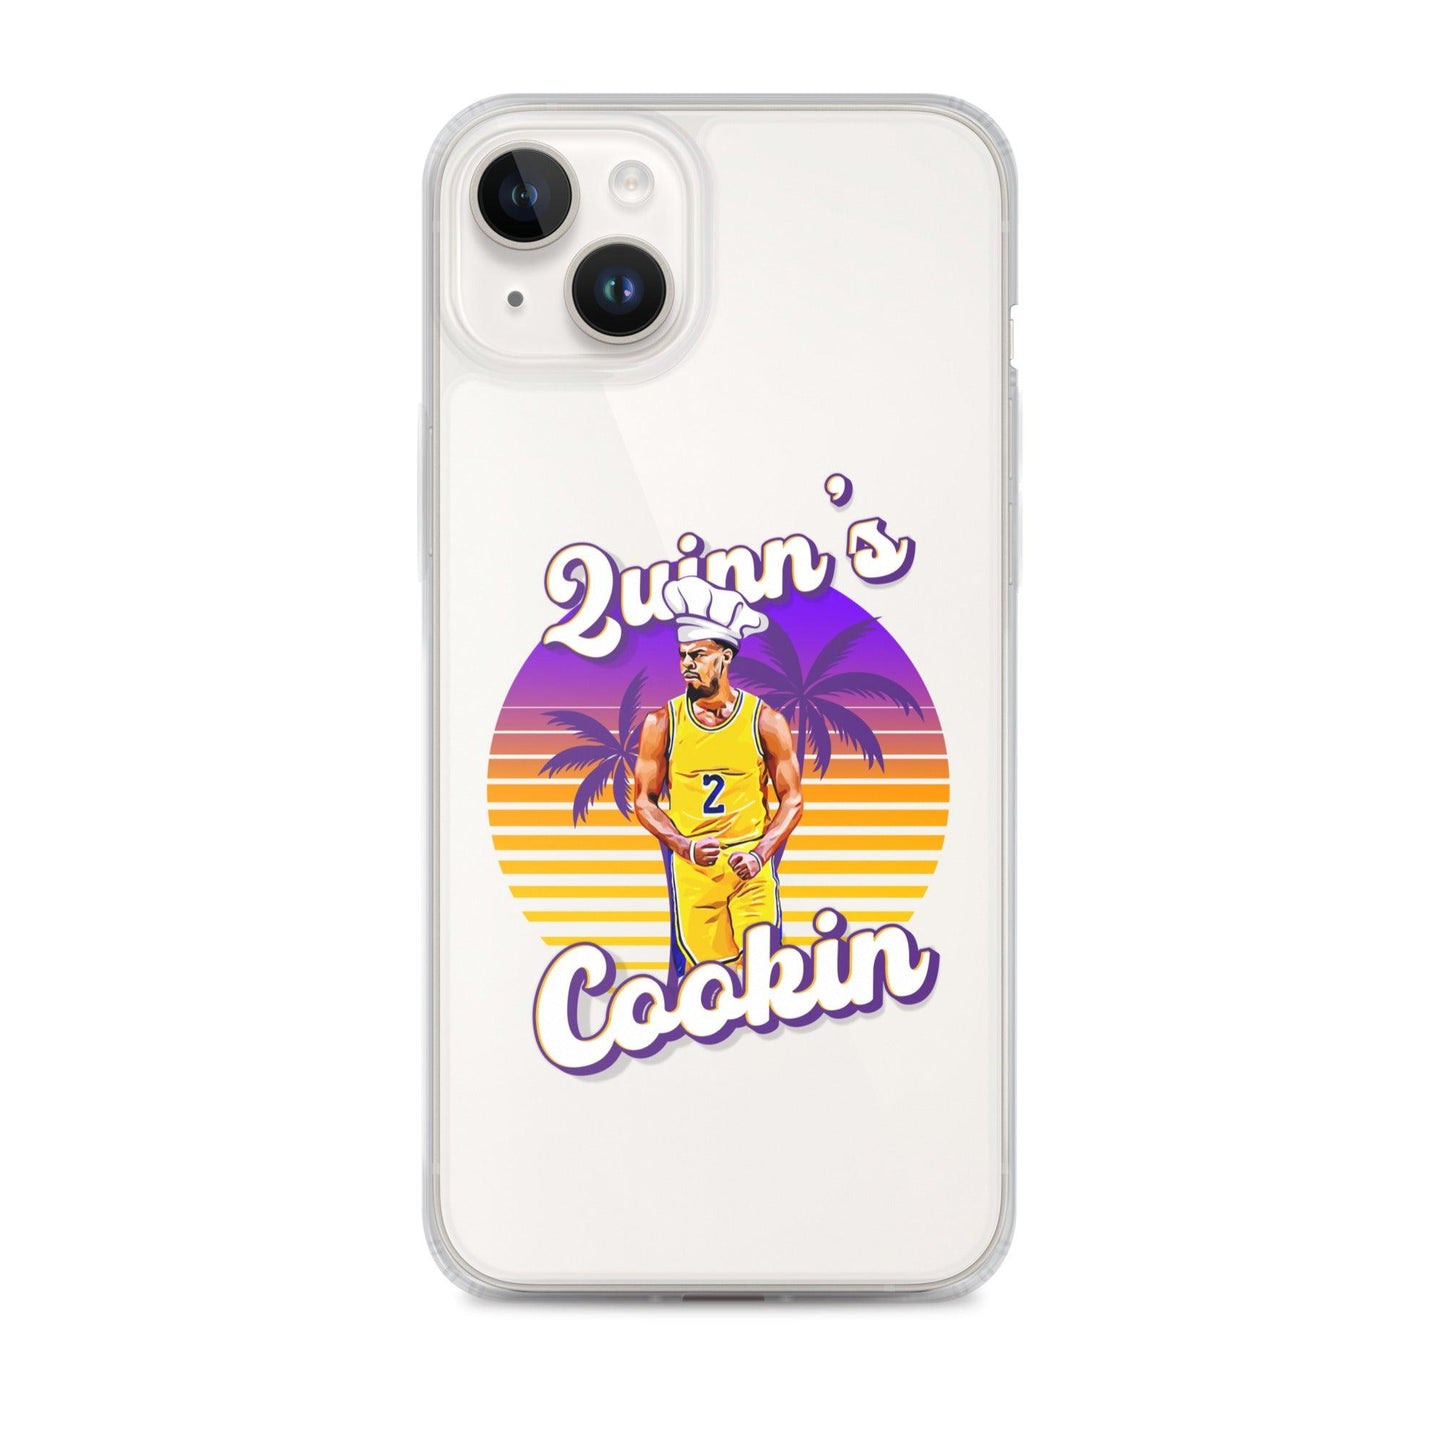 Quinn Cook "Quinns Cookin" iPhone Case - Fan Arch